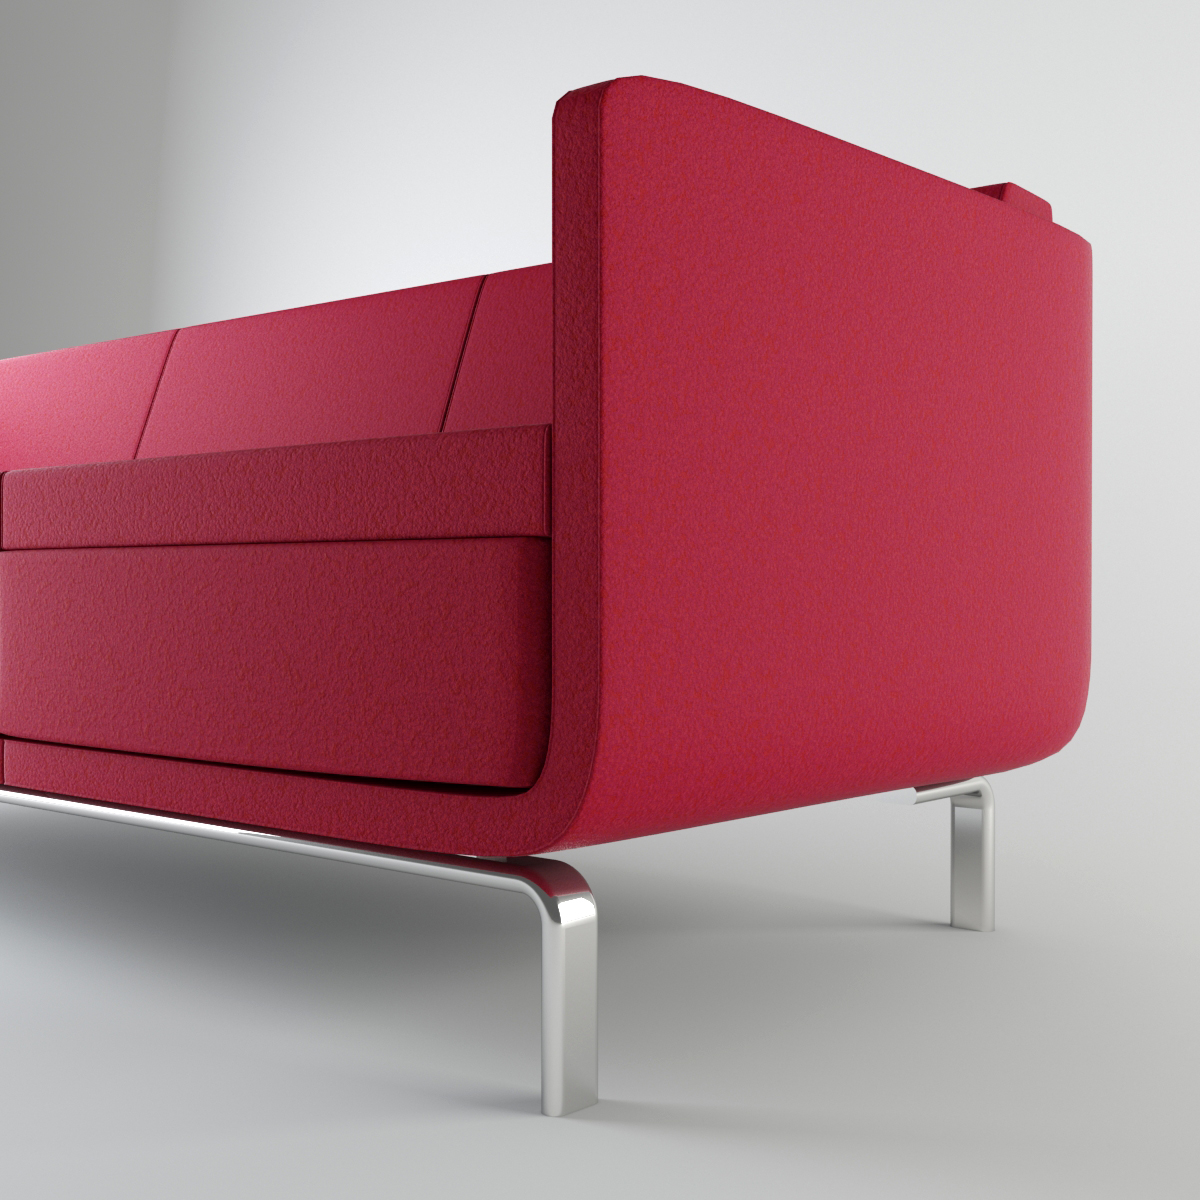 Bernhardt design Arik Levy Gaia sofa seat seating furniture Couch